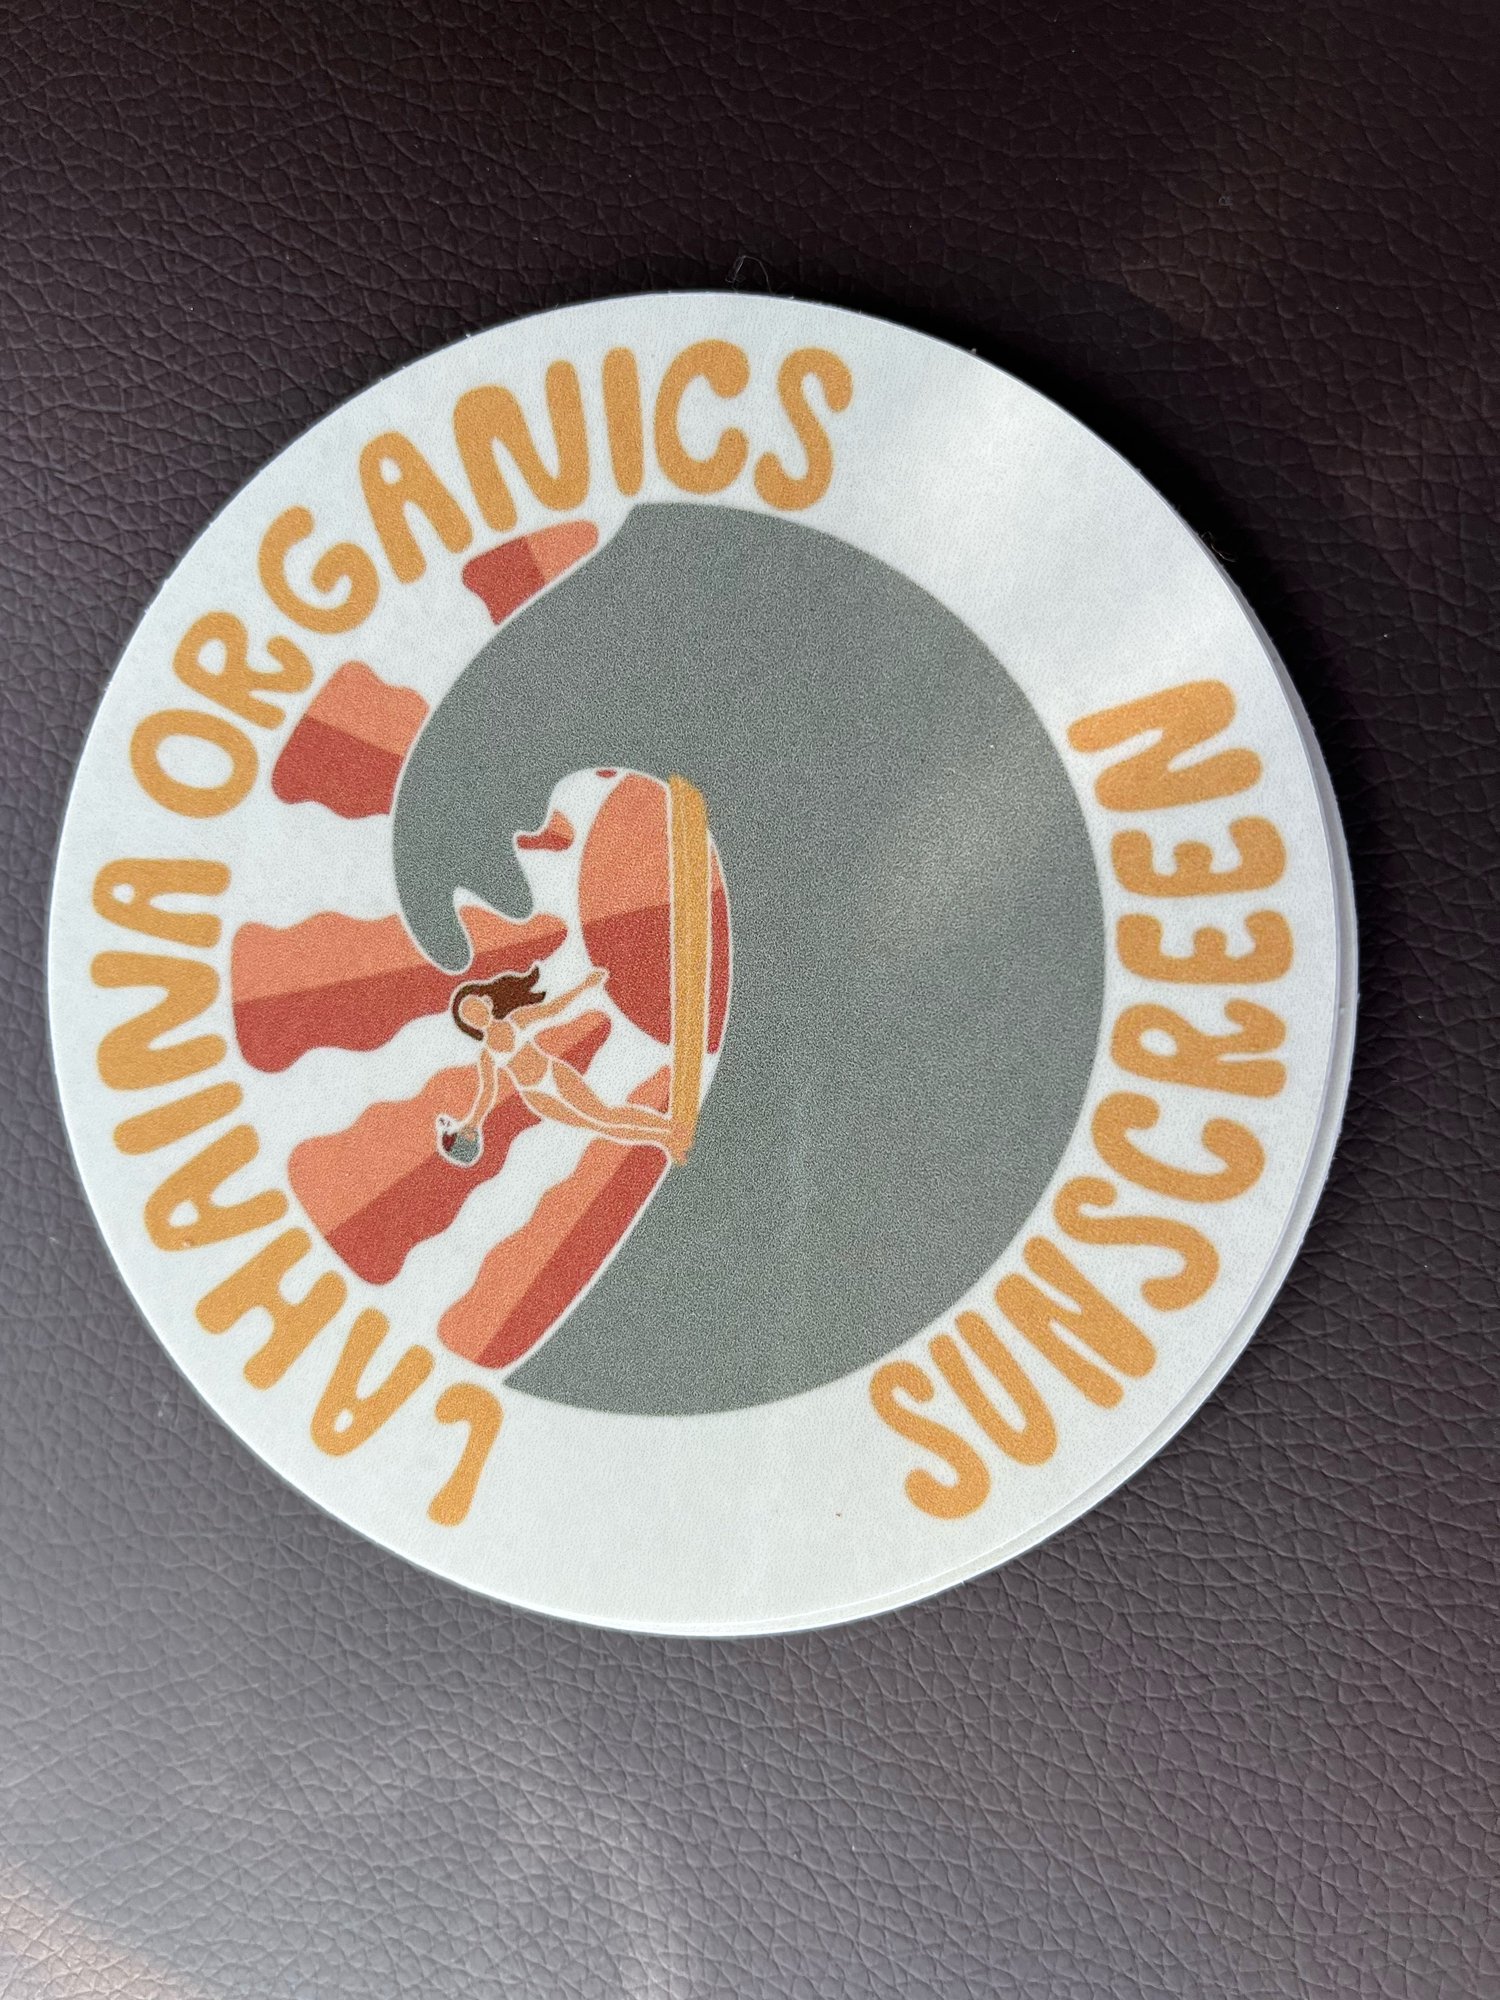 Image of Lahaina Organics stickers 